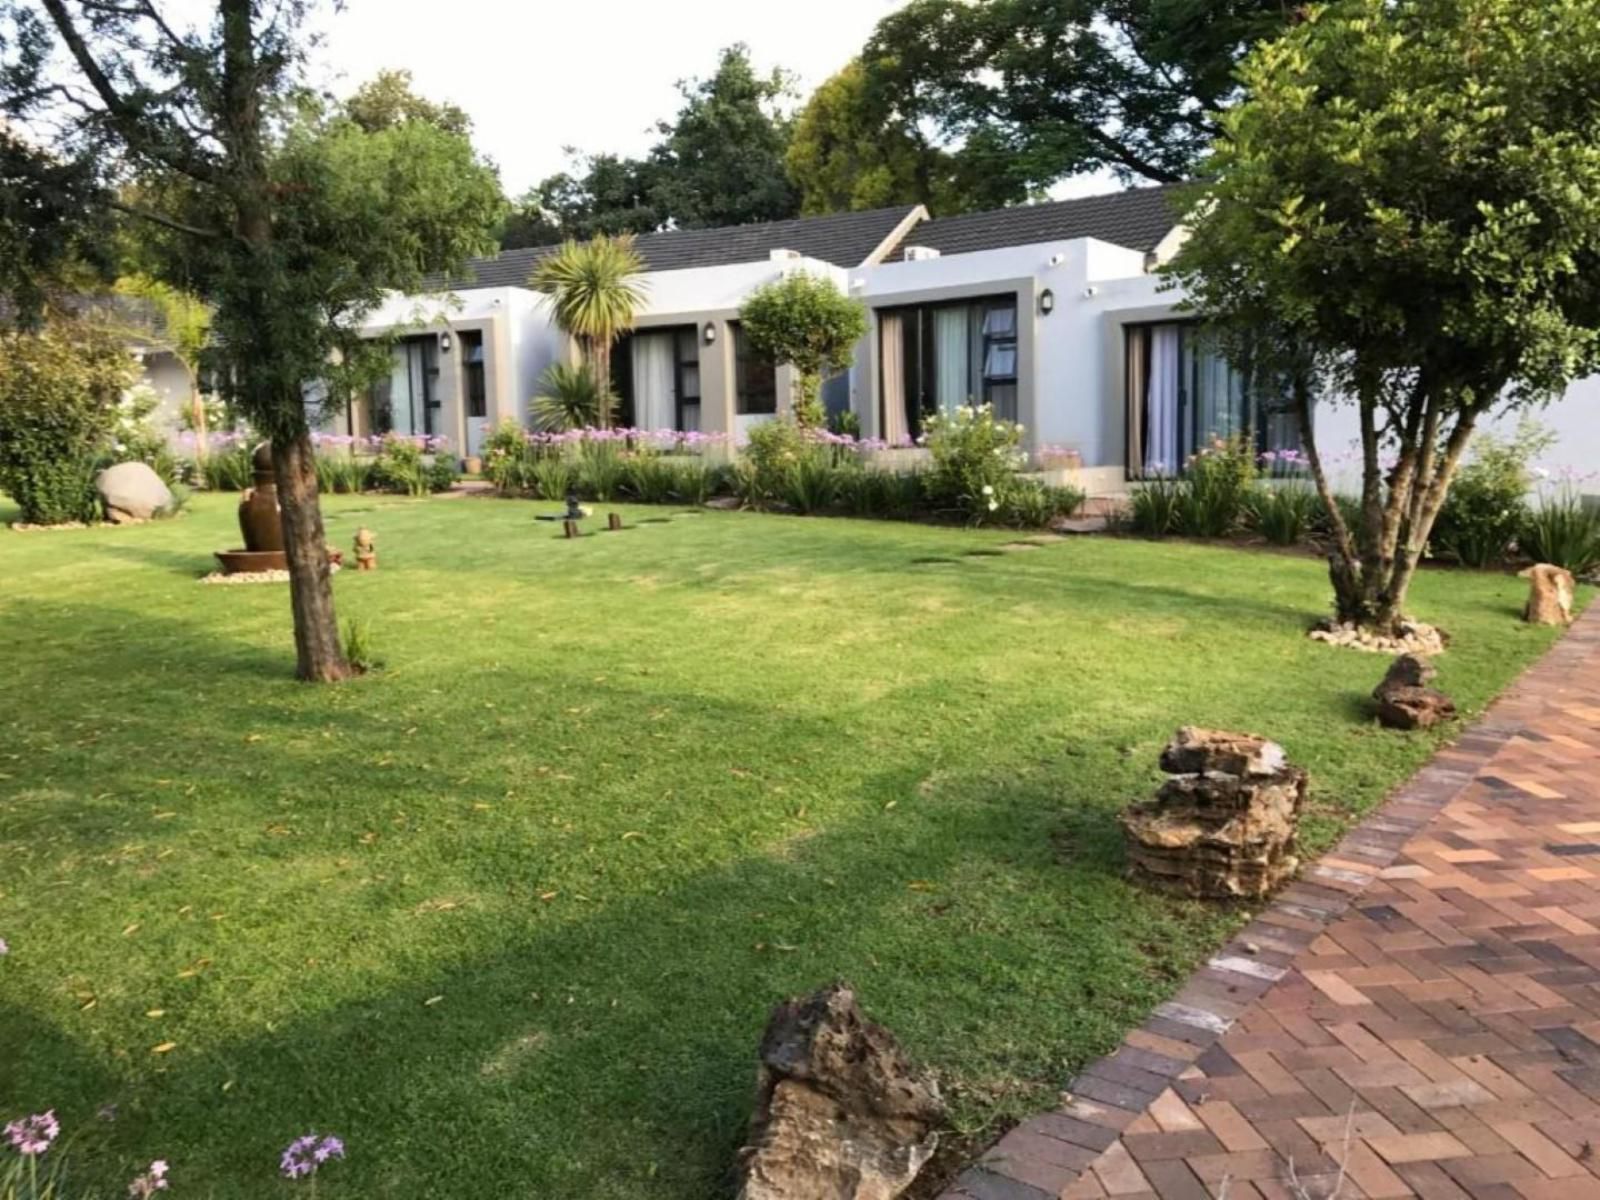 6 On Morris Guest Lodge Woodmead Johannesburg Gauteng South Africa House, Building, Architecture, Garden, Nature, Plant